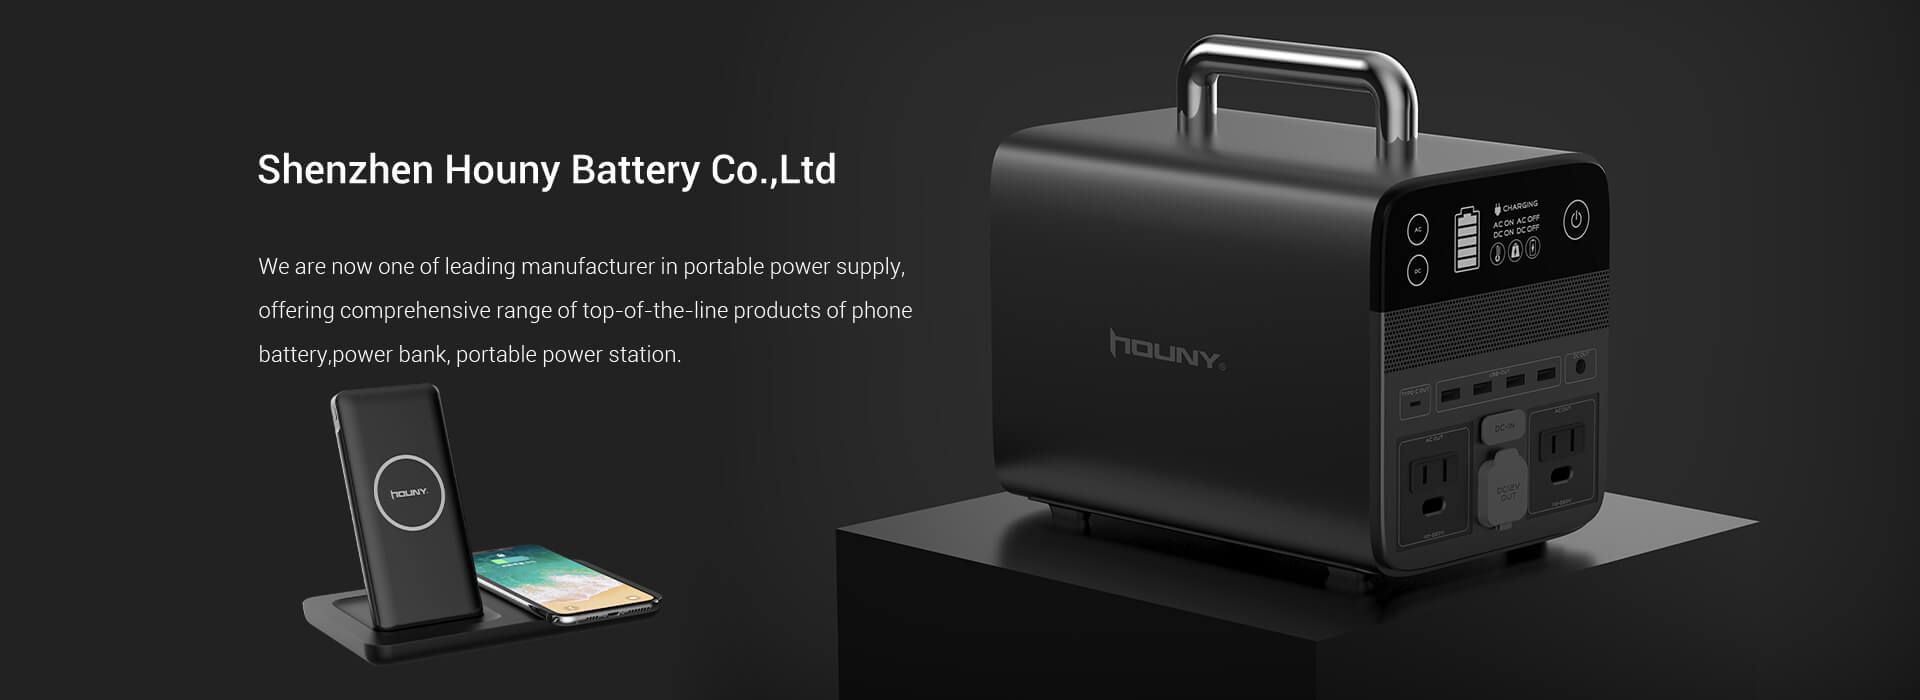 Shenzhen Houny Battery Co., Ltd Main Image